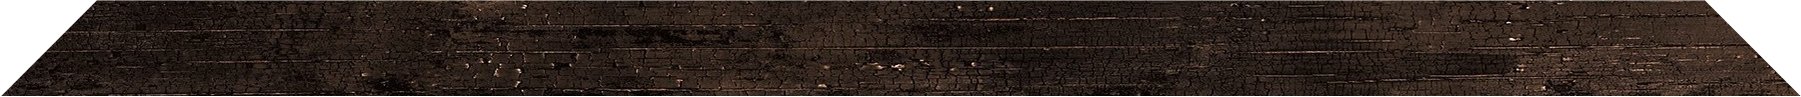 Бордюры Versace Eterno Trapezio Cassettonato Brown 263181, цвет коричневый, поверхность натуральная, шеврон, 48x900